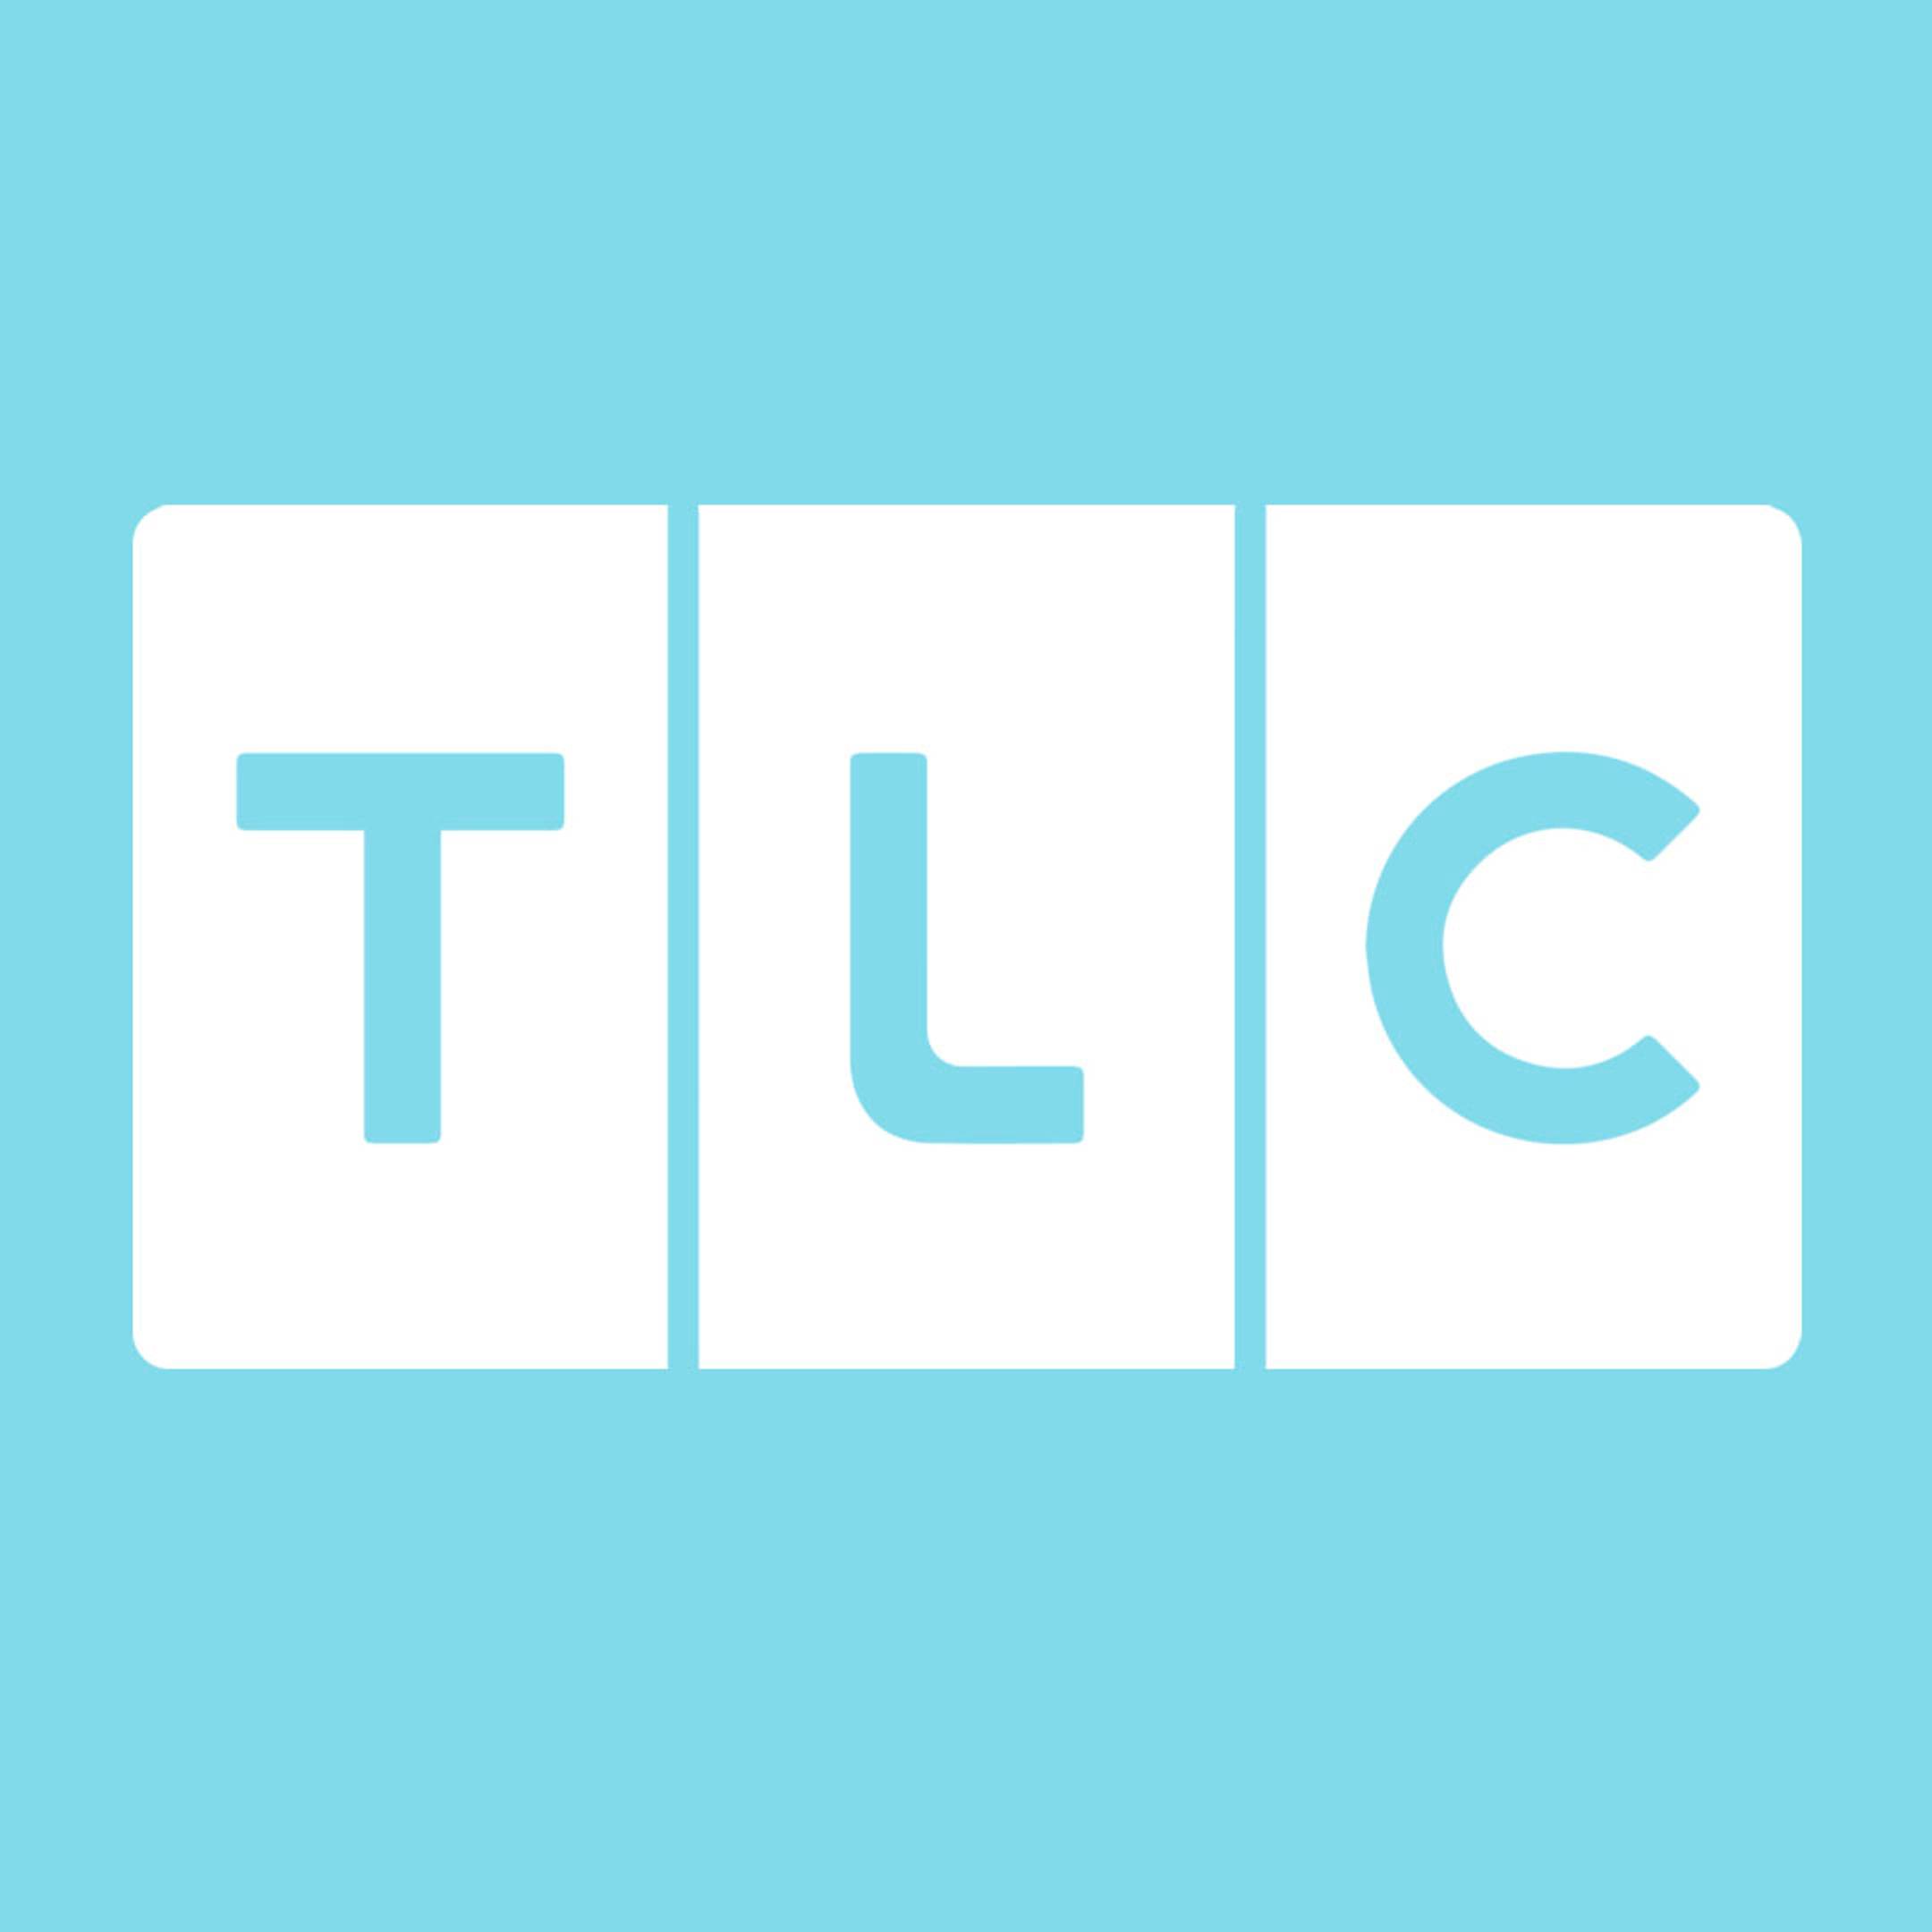 TLC logo on blue background 